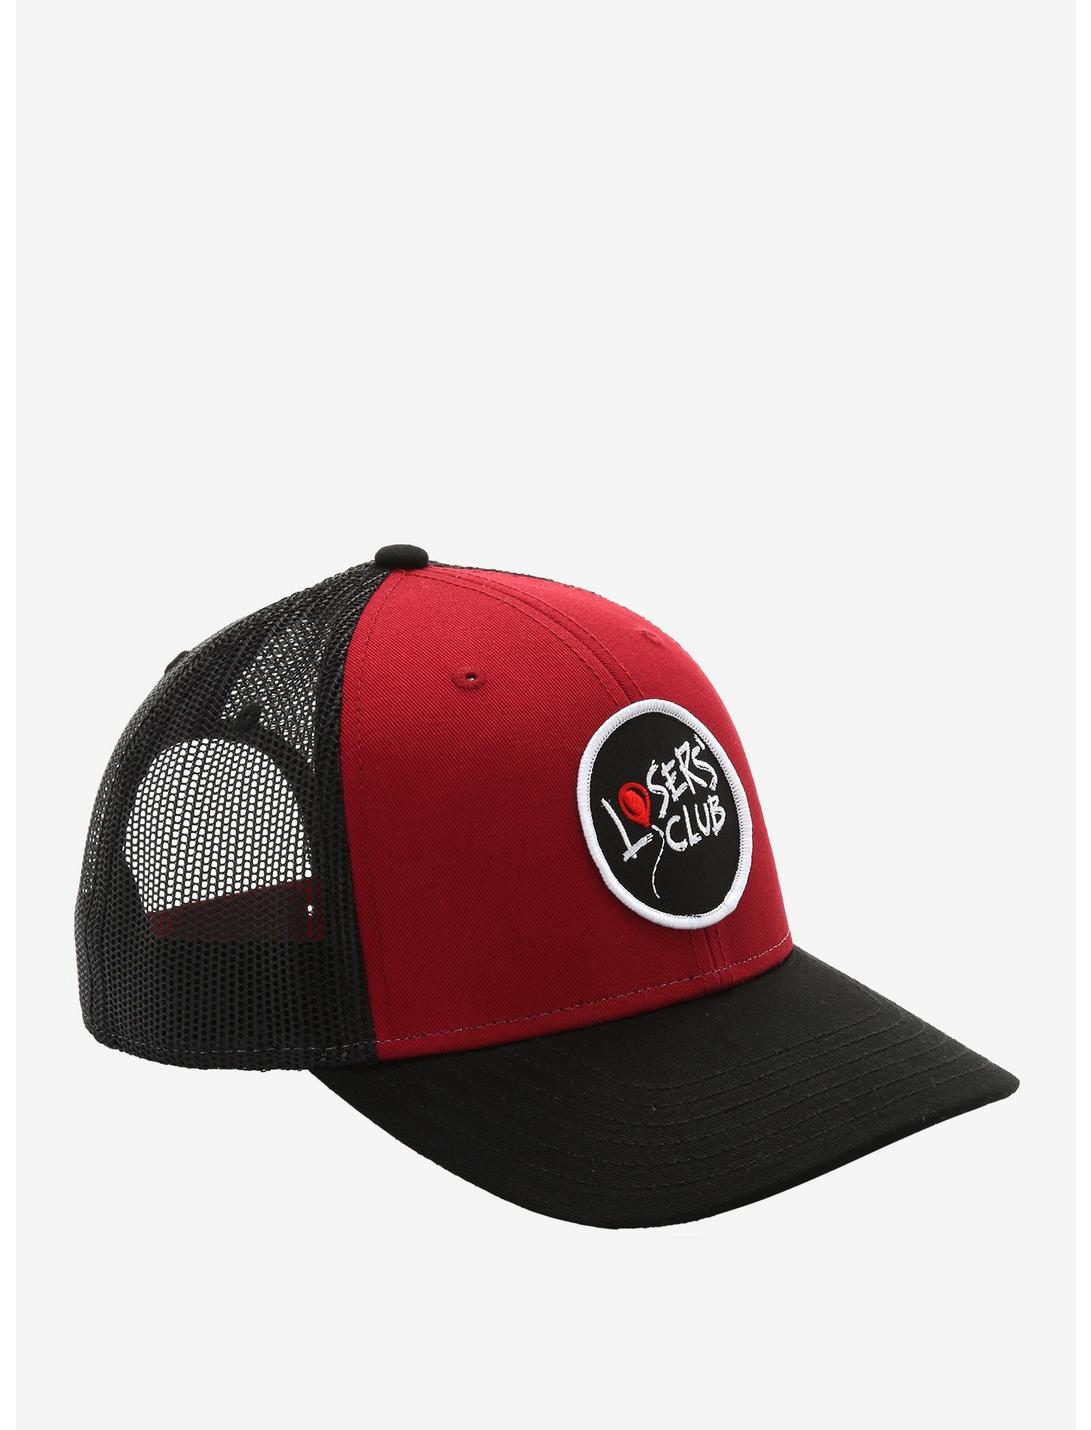 IT Losers' Club Trucker Hat, , hi-res